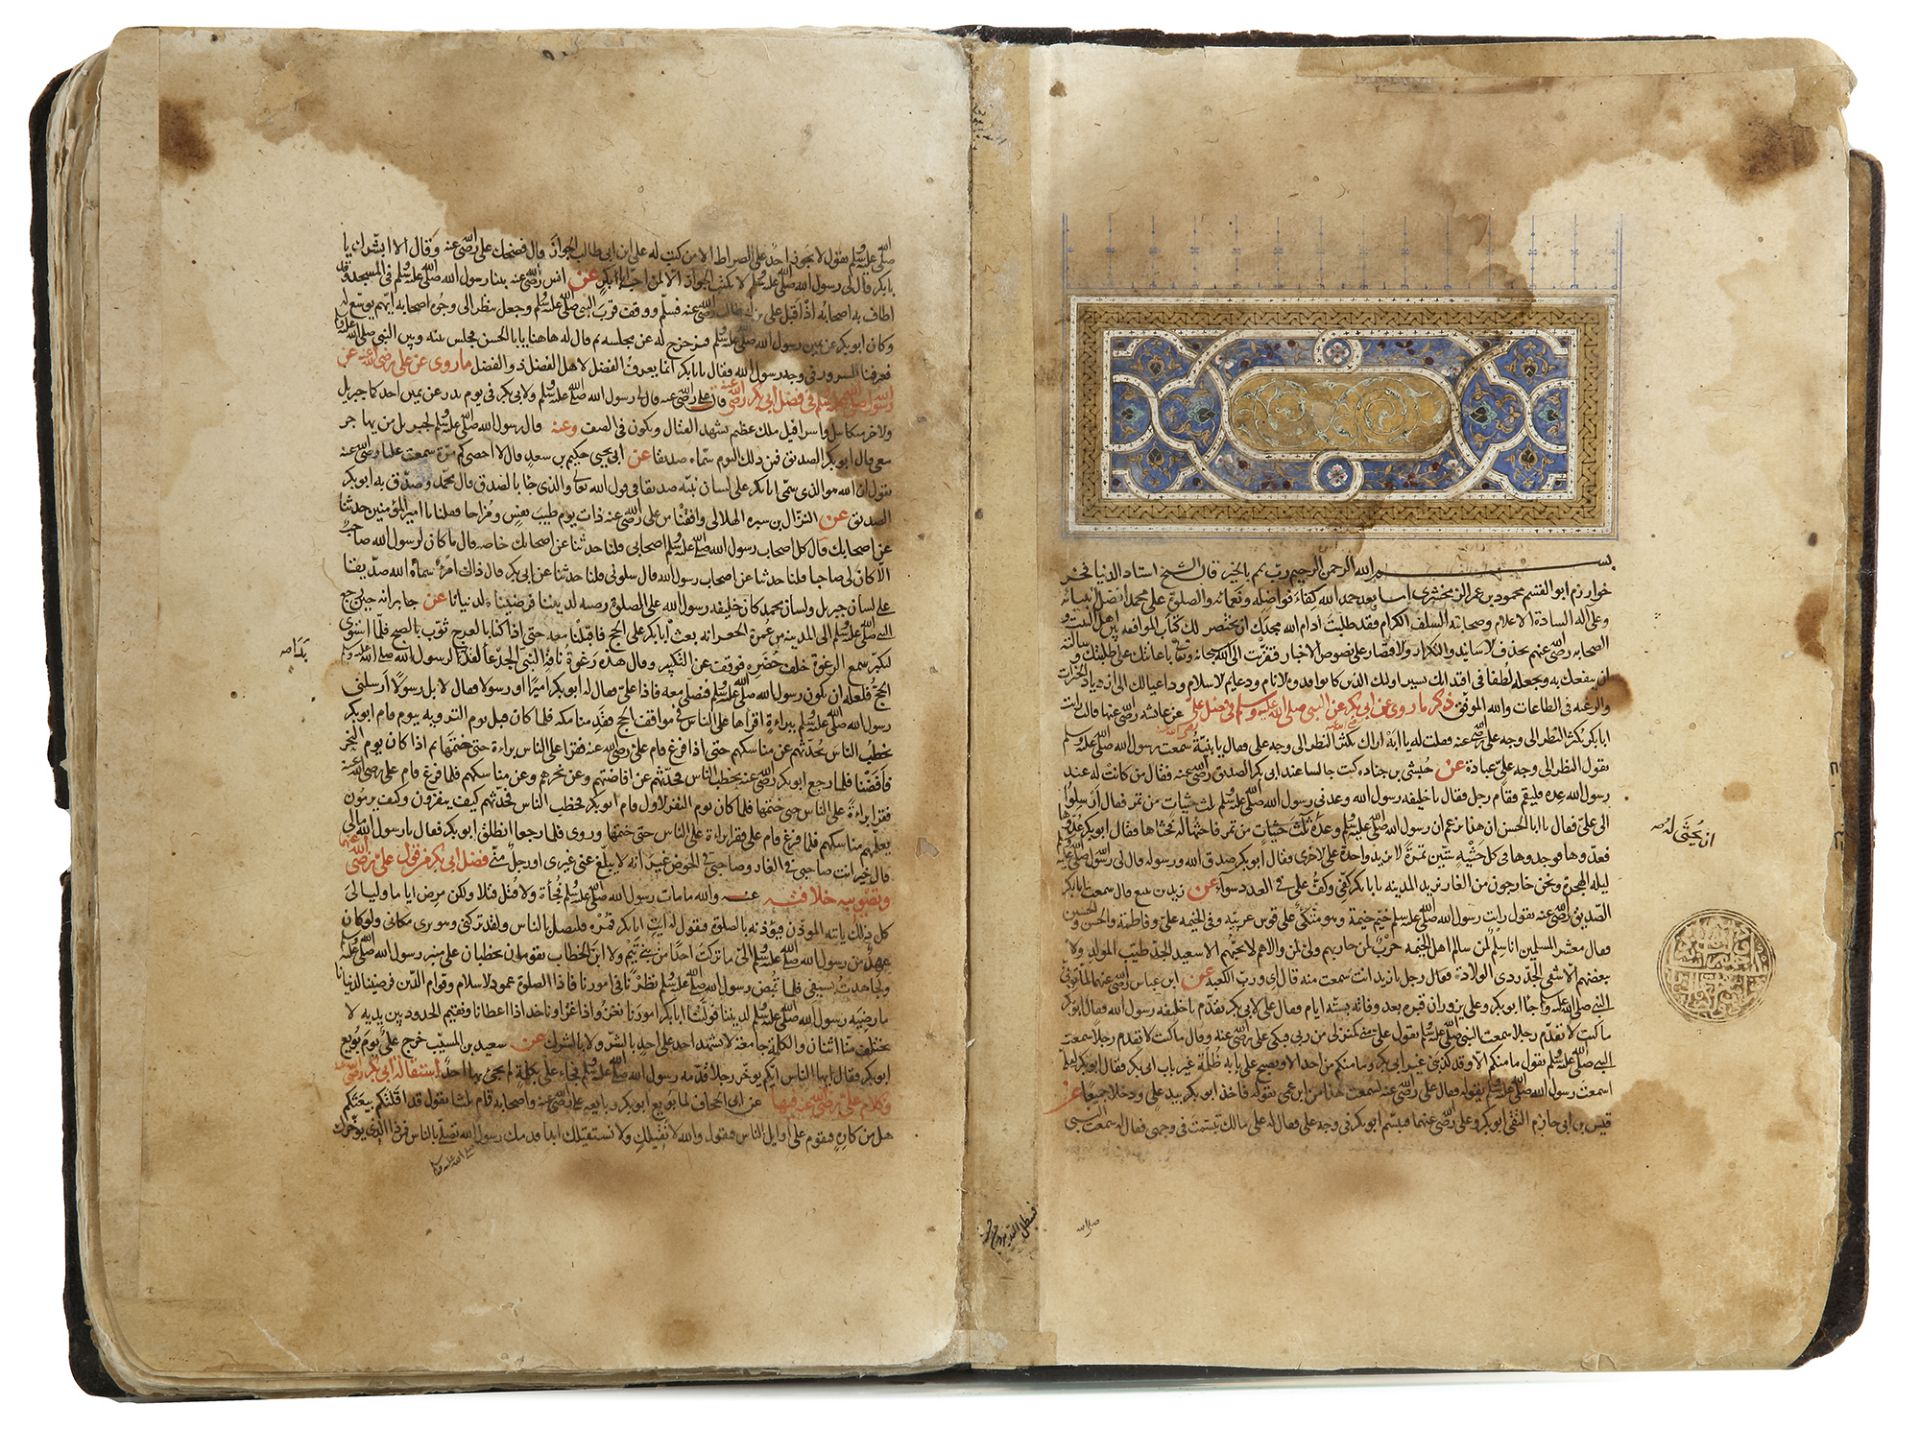 AL-MUKHTASAR MIN KITAB AL-MOUAFQA BEEN AL-BAYT WA SAHABAH BY AL-ZAMAKHSHARI (1075-1144)